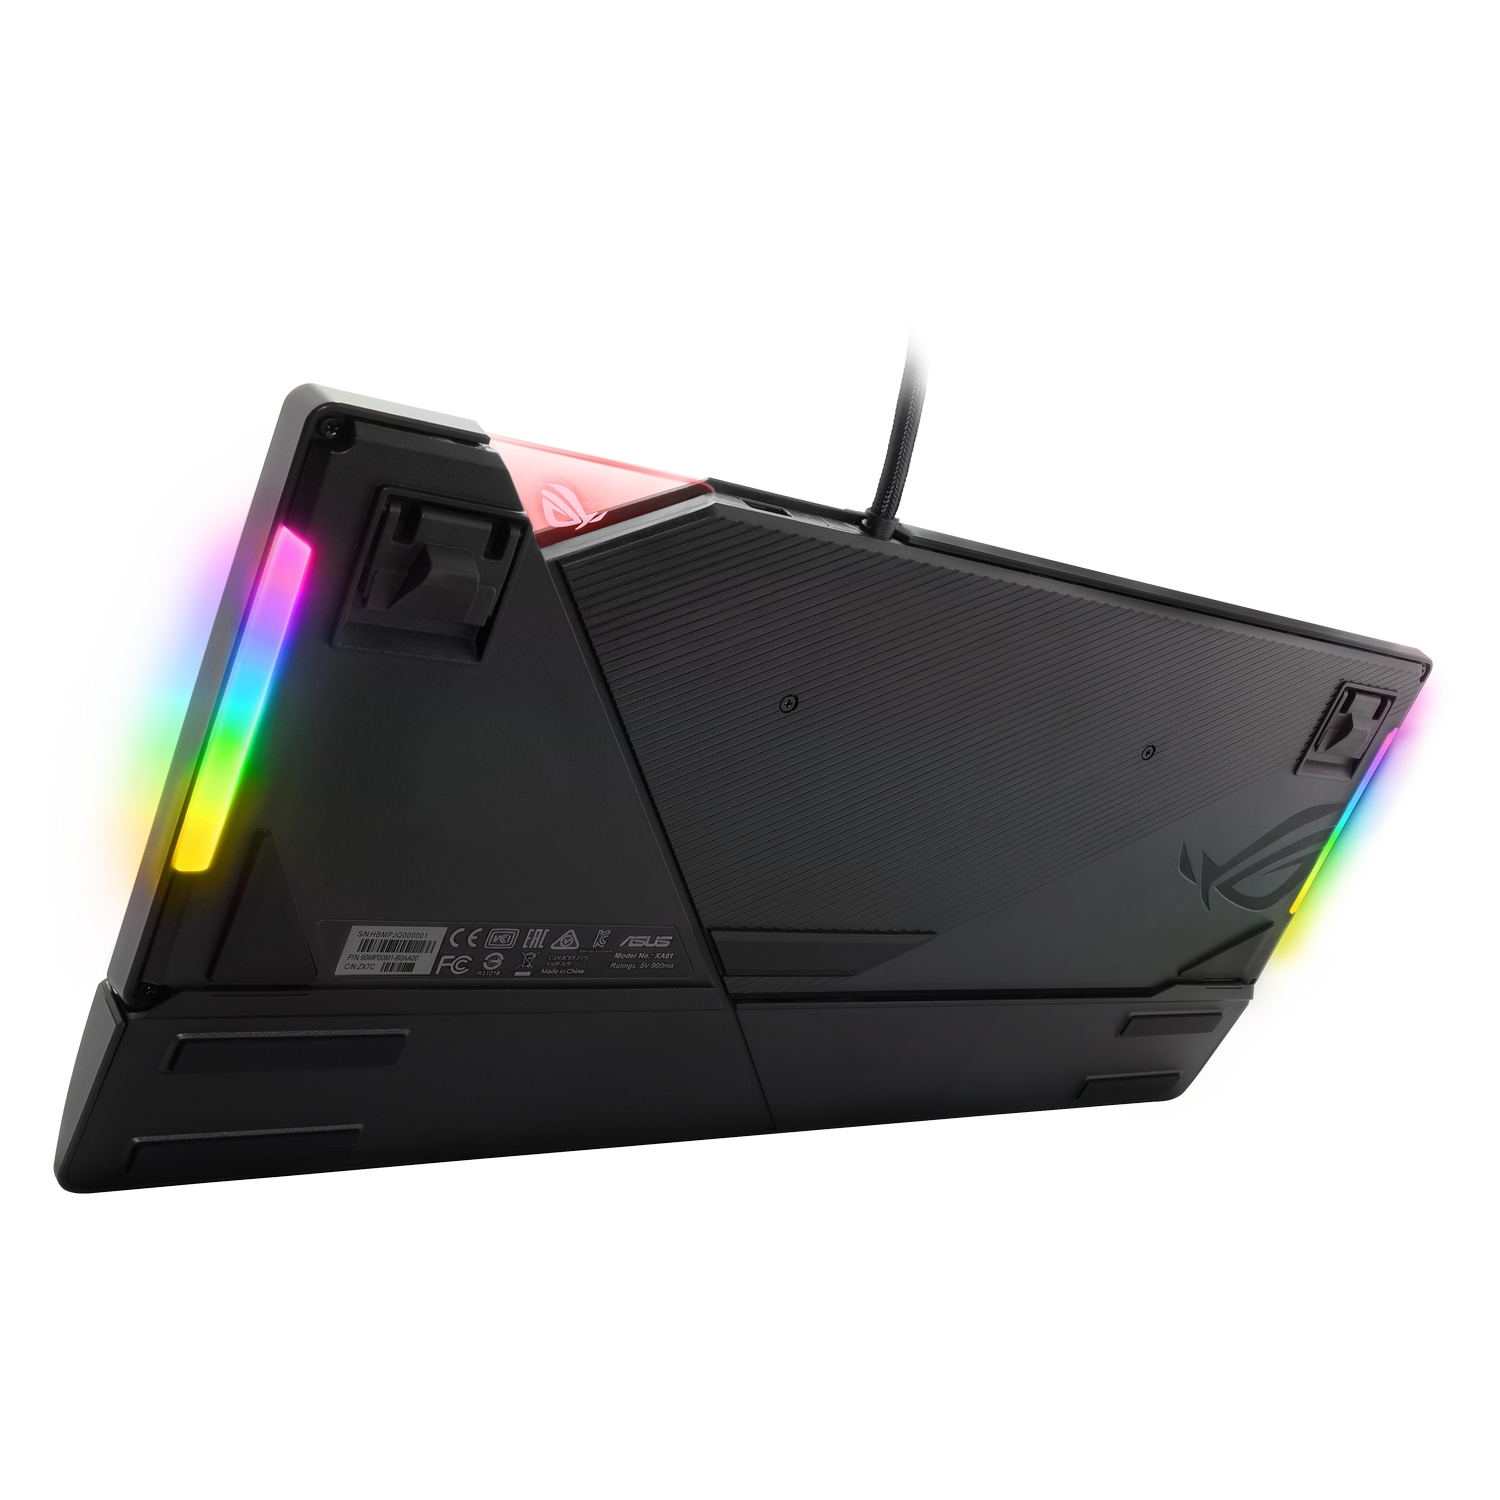 Asus - ASUS ROG STRIX Flare USB RGB Mechanical Gaming Keyboard Cherry MX Red Switc